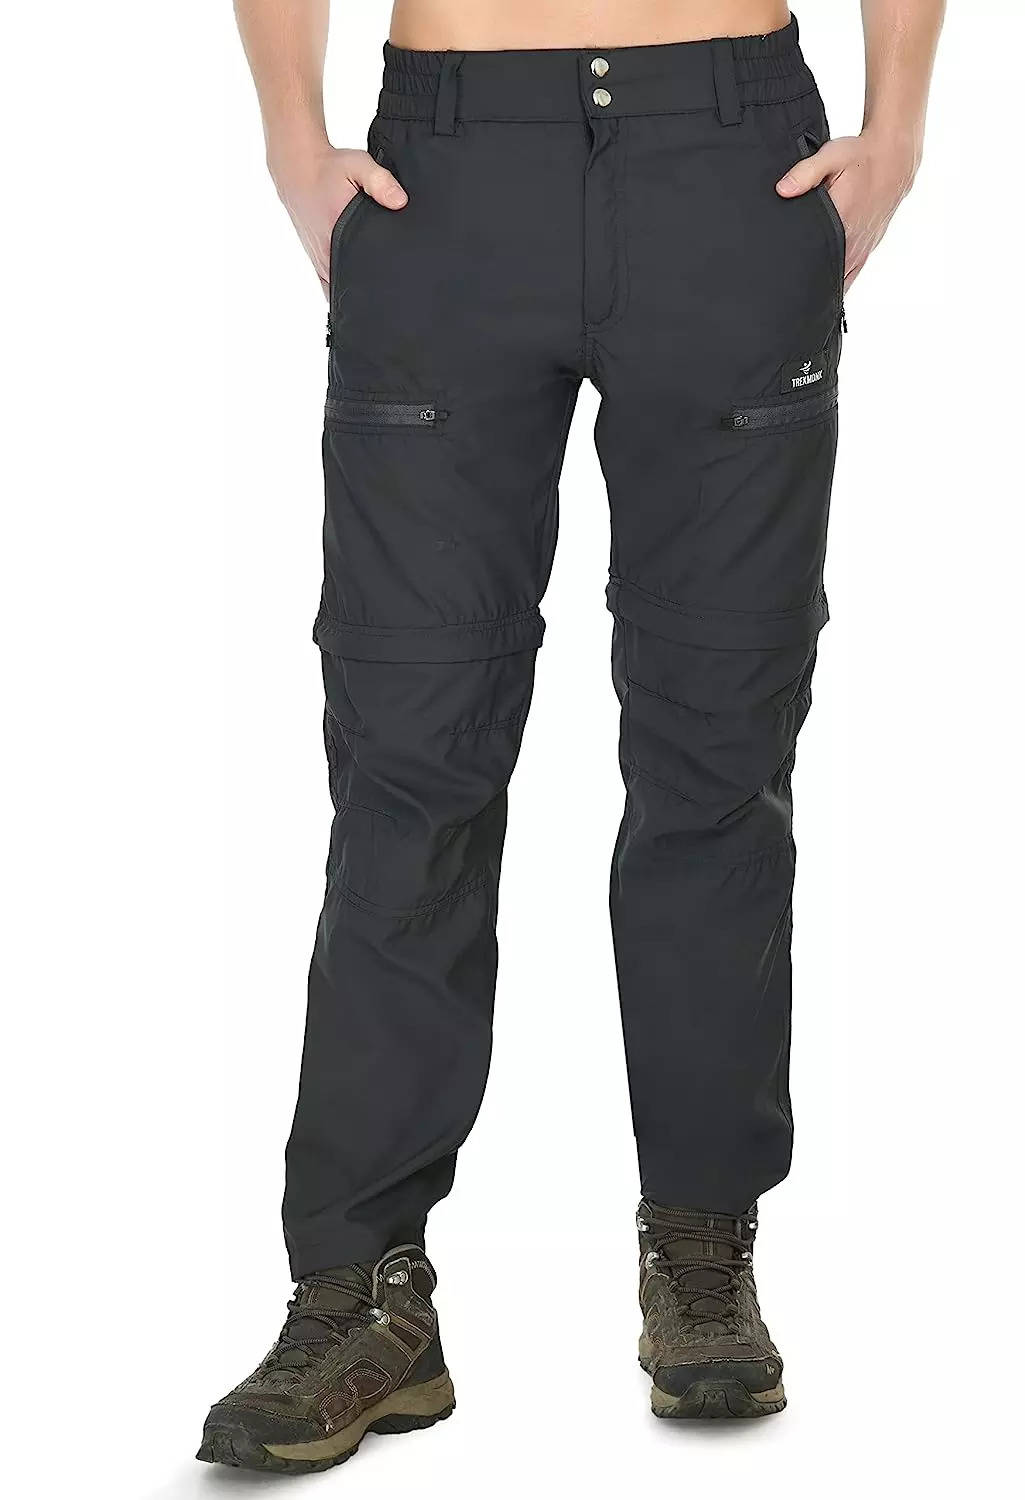 Buy Navy Blue Cargo Pants | Shop Now – Reccy